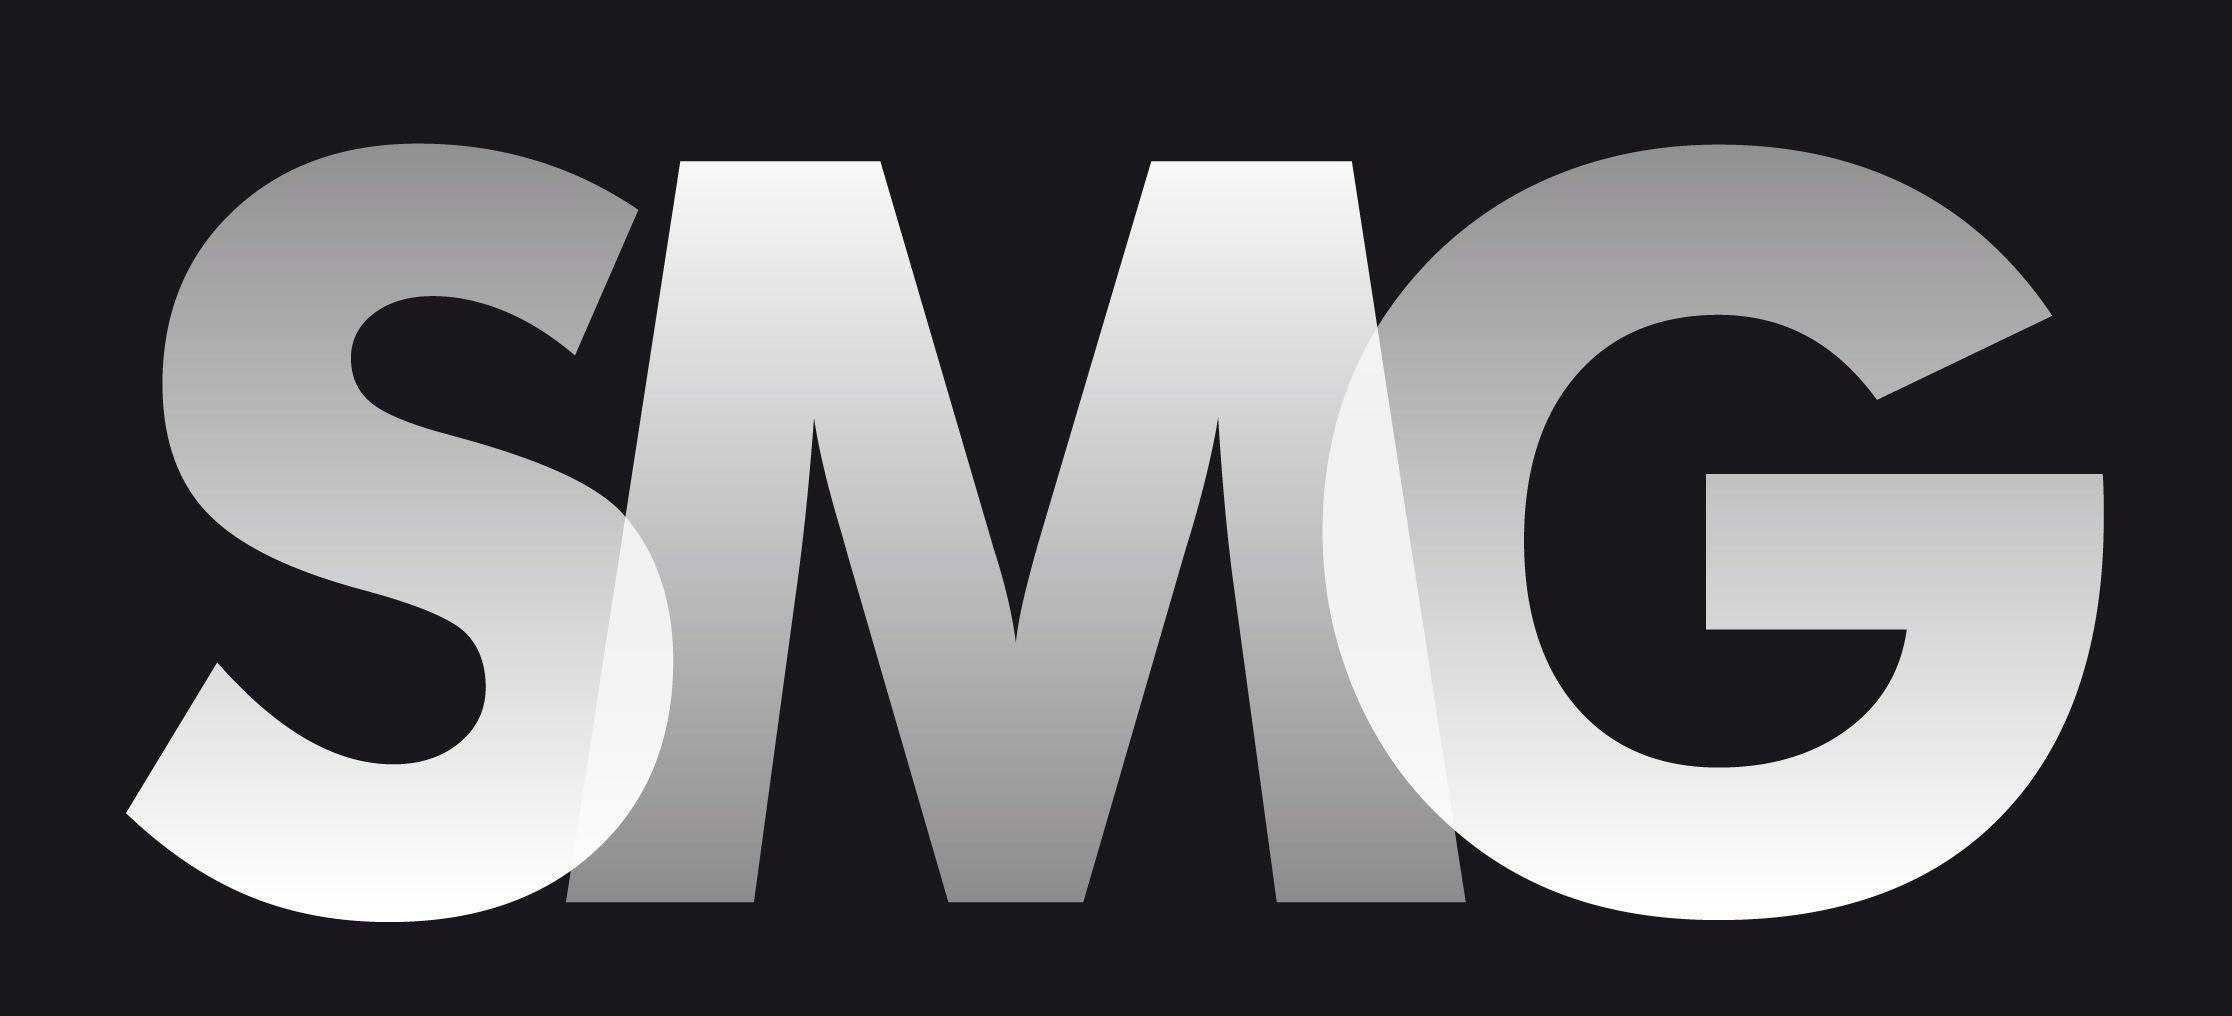 SMG Logo - SMG Logo 2014 (3) - The WoolSafe Organisation